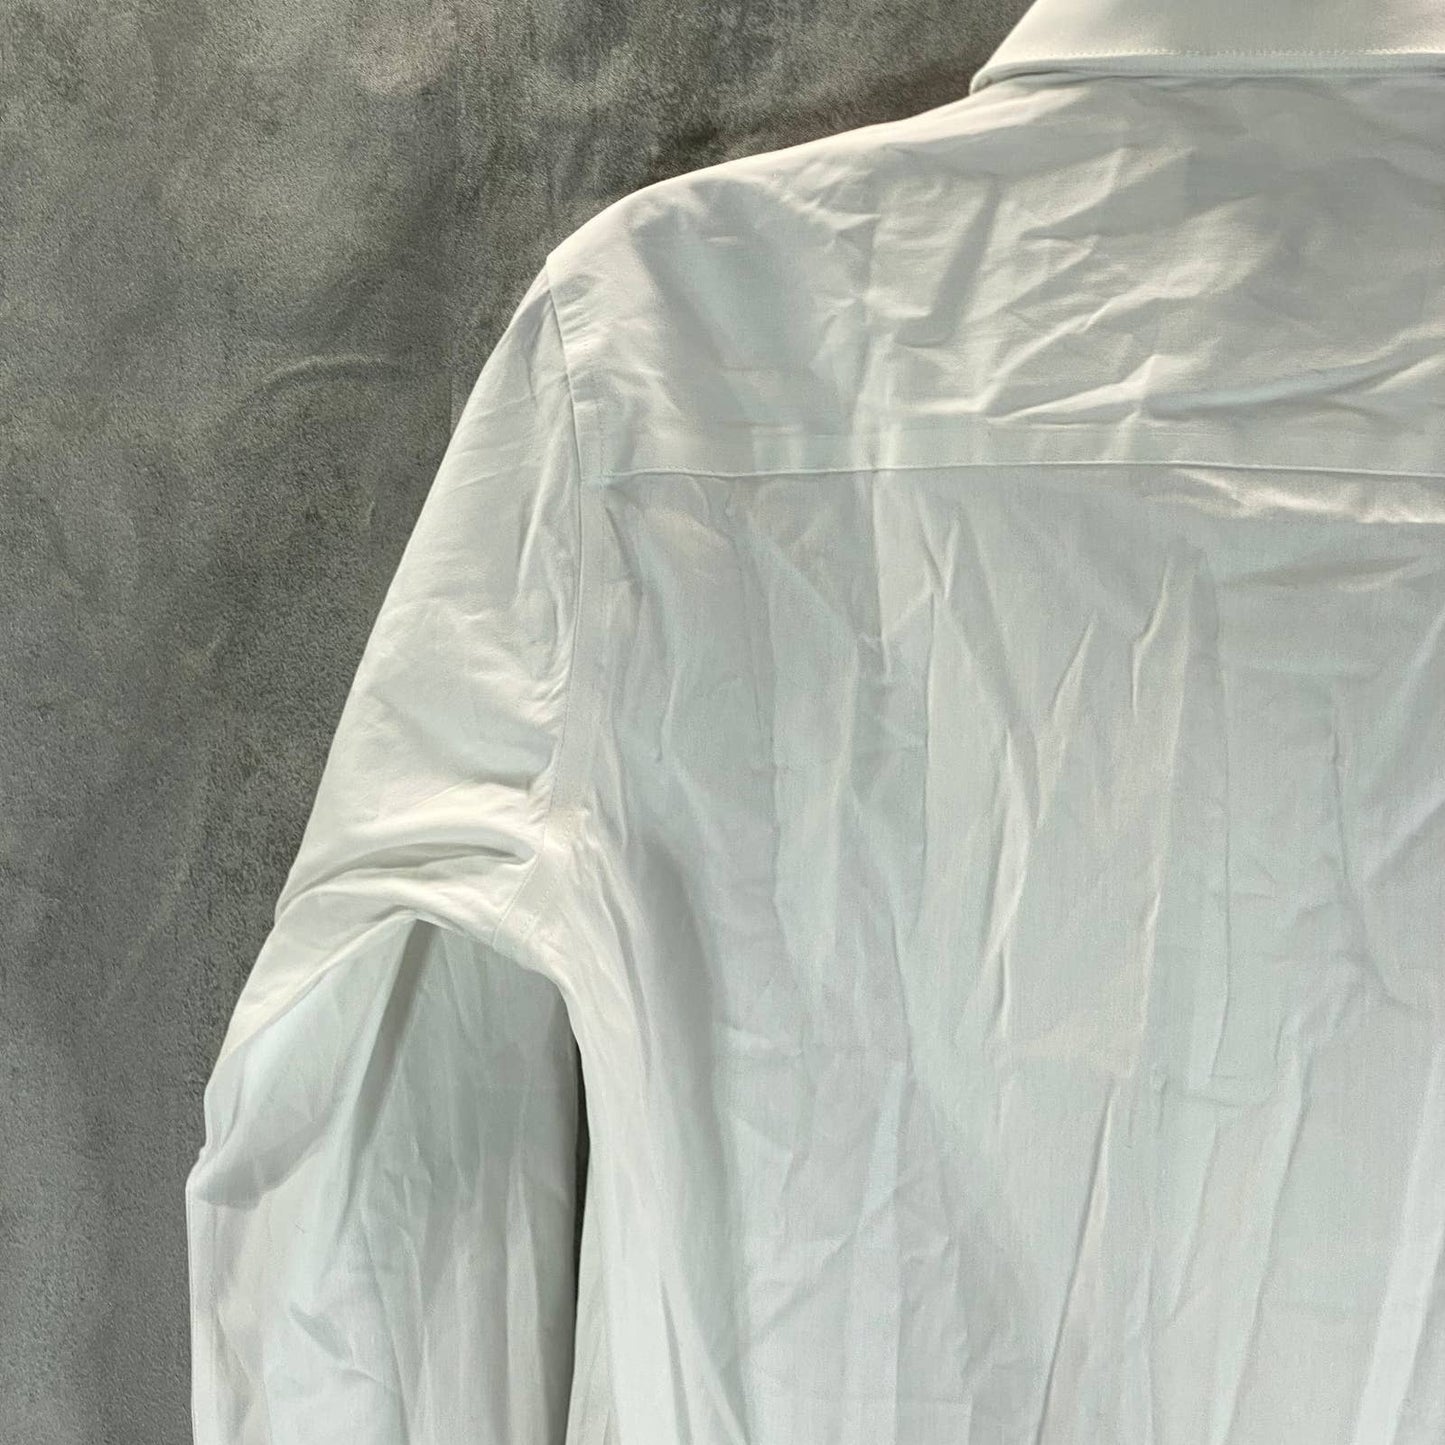 ALFANI Men's White Slim-Fit 2-Way Stretch Button-Up Long-Sleeve Dress Shirt SZ S